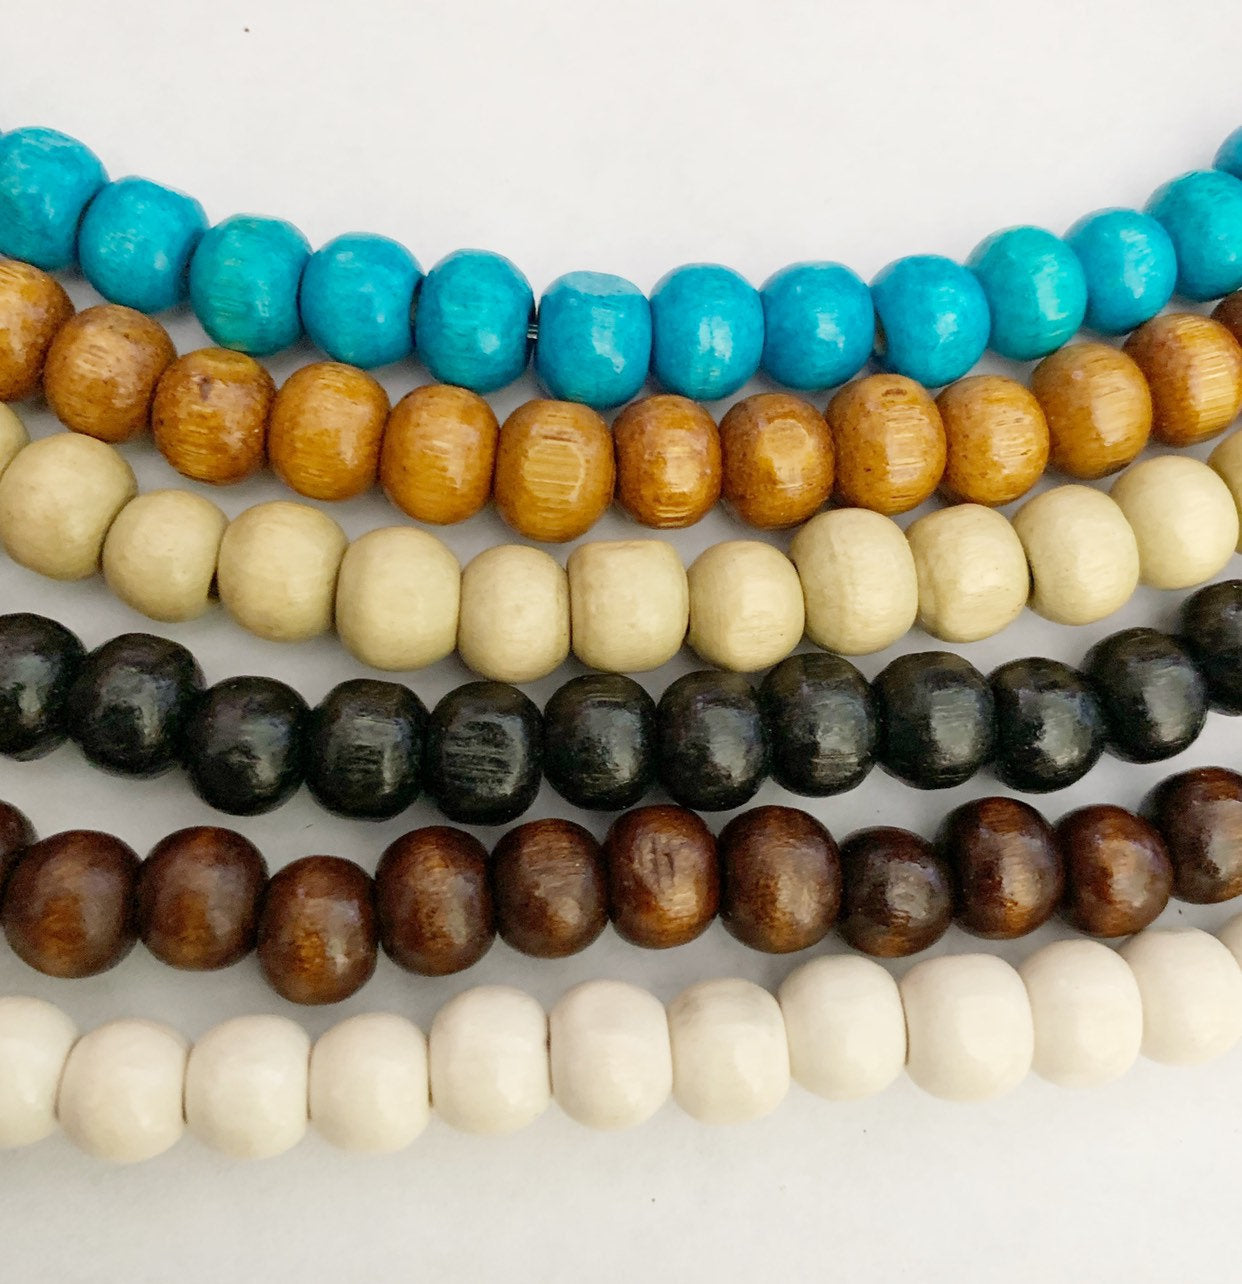 Design Your Own Mala Necklace - Includes Good Vibes Spritz - 108 Beads - Prayer Beads - Mala Beads - Meditation Talisman